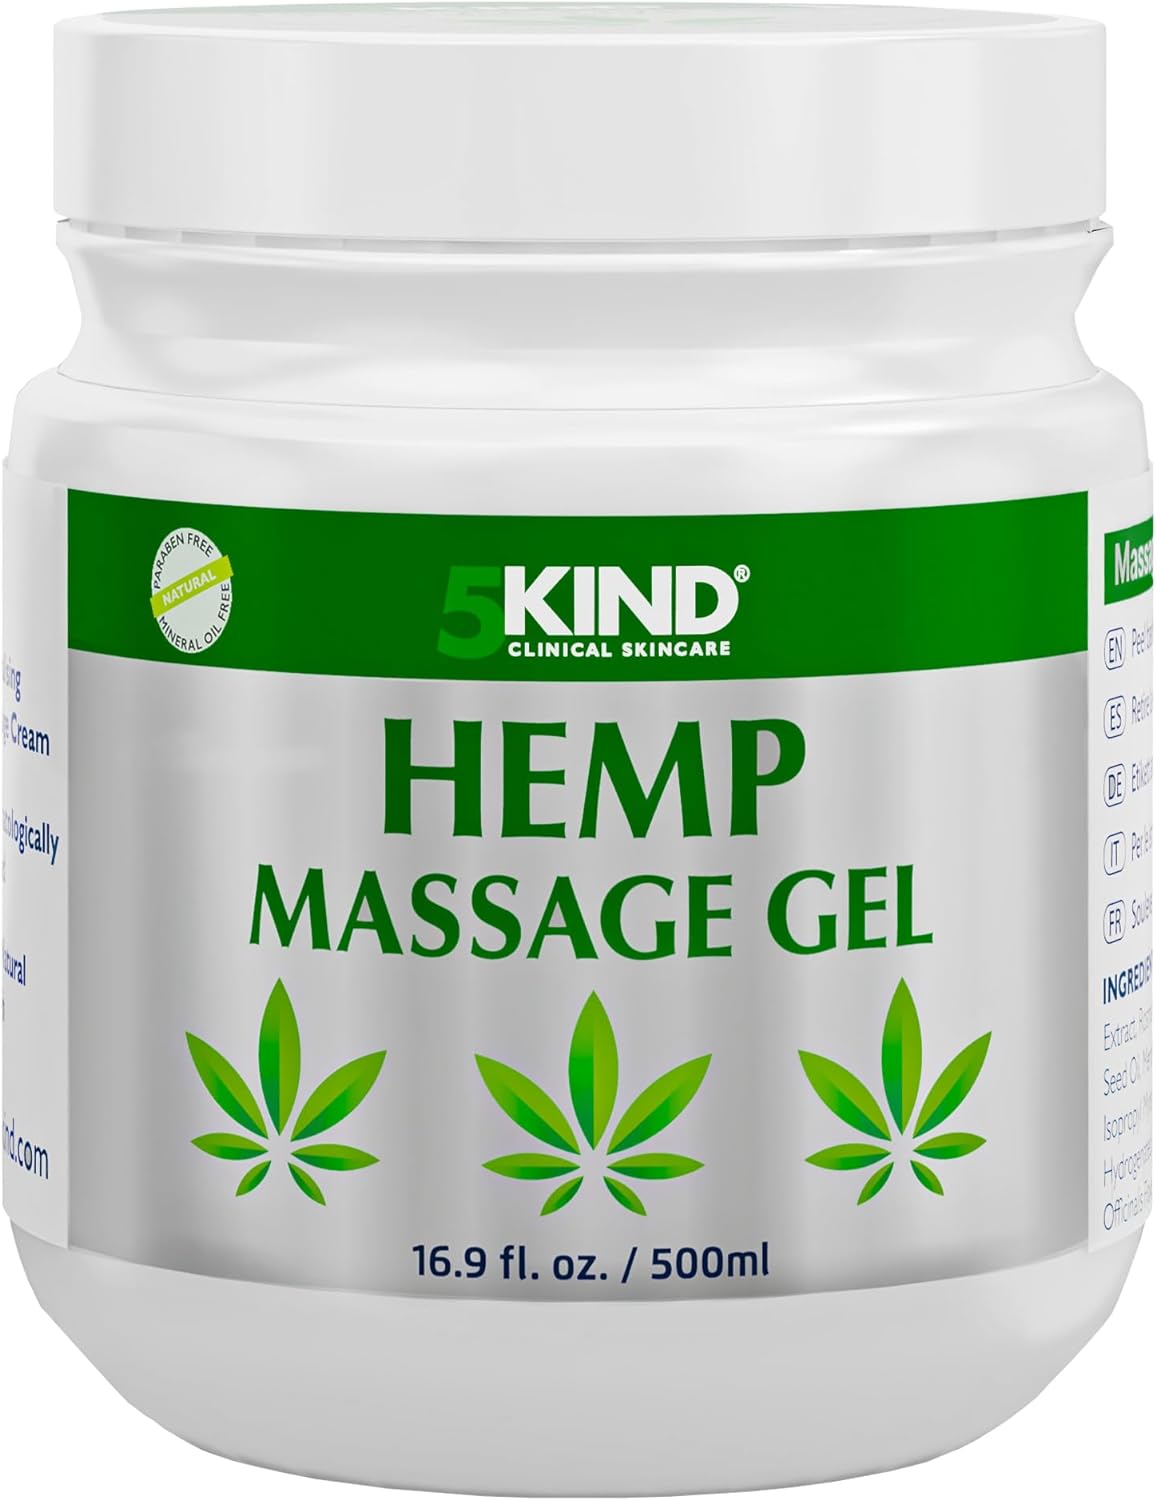 5kind Hemp Active Gel 500ml - High Strength Hemp Oil Formula - Natural Hemp Massage Gel for Back, Muscles, Feet, Knees, Neck & Shoulders - Hemp Gel Muscle Rub Rich in Natural Extracts